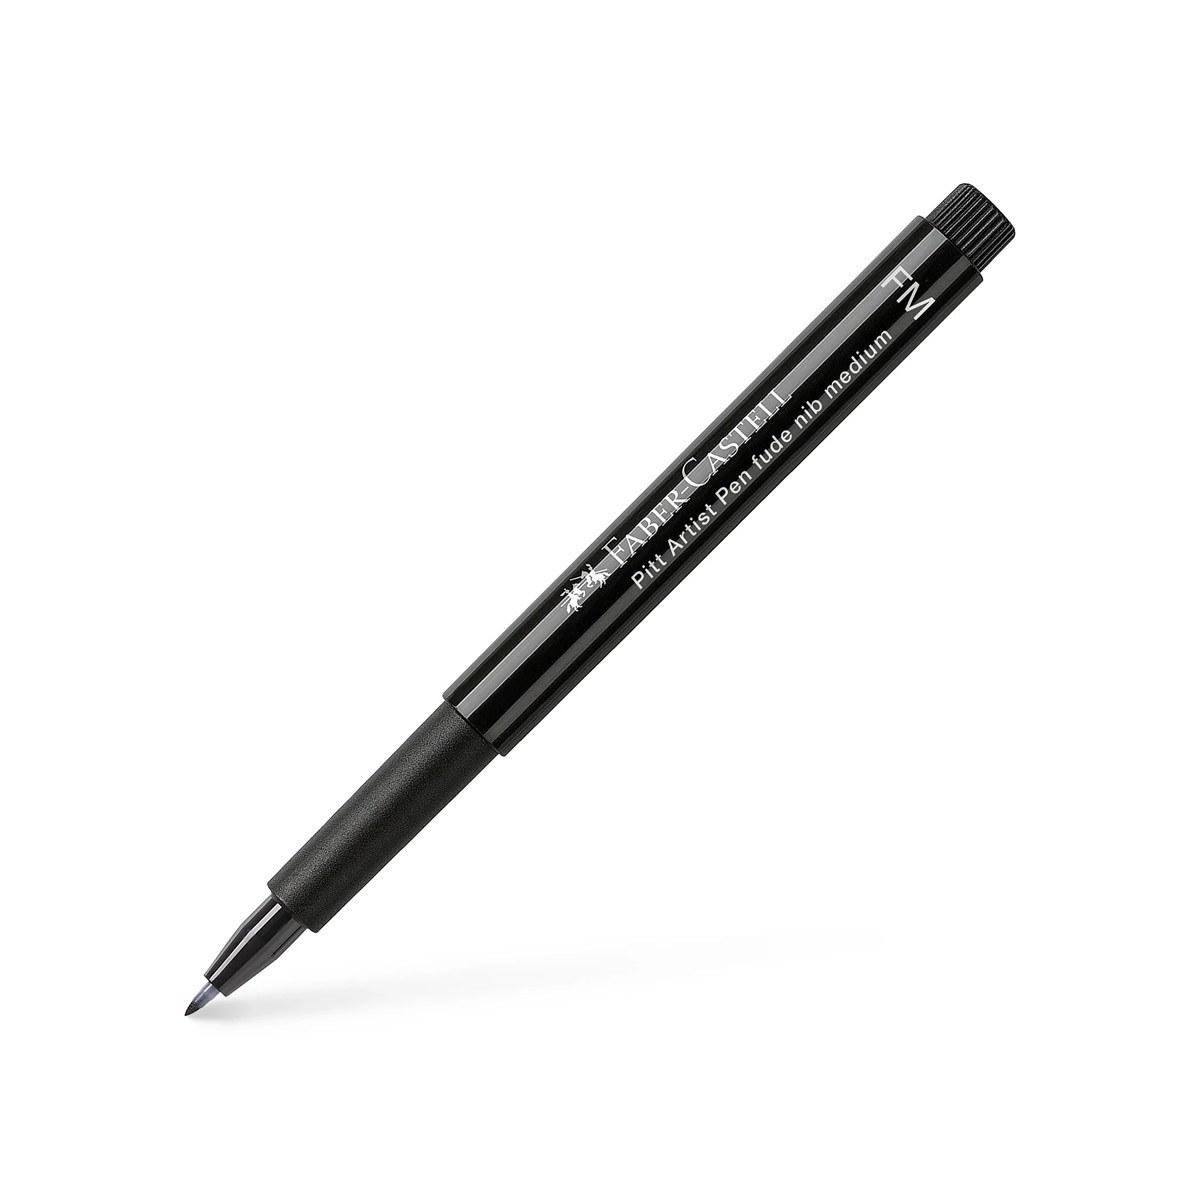 Faber-Castell Σετ Πενάκια Σχεδίου Pitt Artist Pen Black & Grey